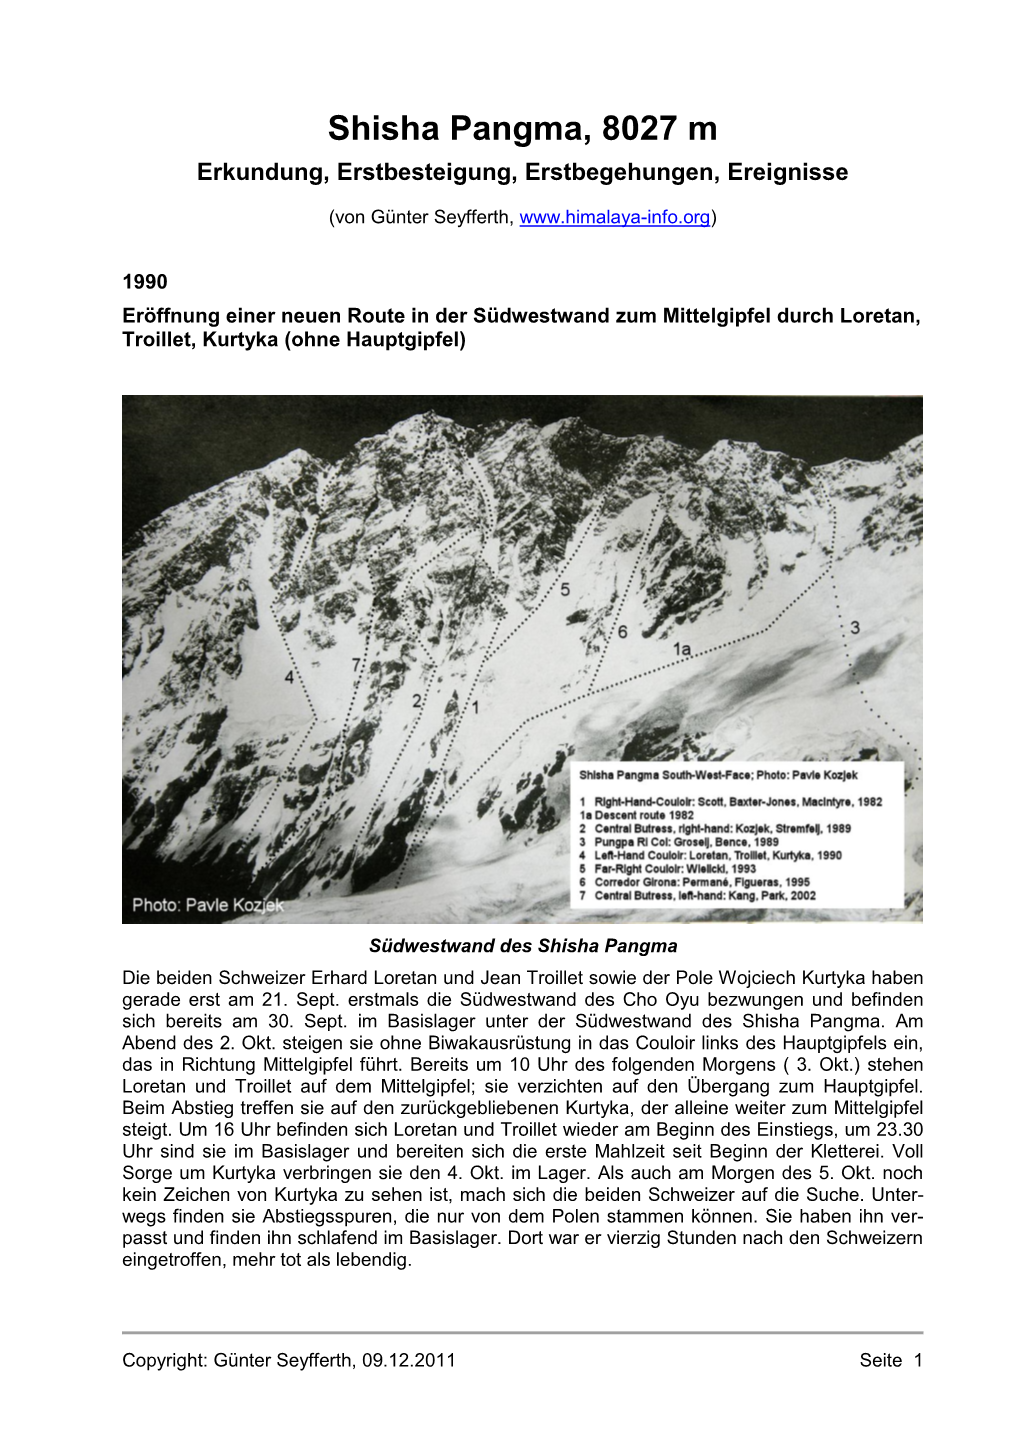 Shisha Pangma, 8027 M Erkundung, Erstbesteigung, Erstbegehungen, Ereignisse